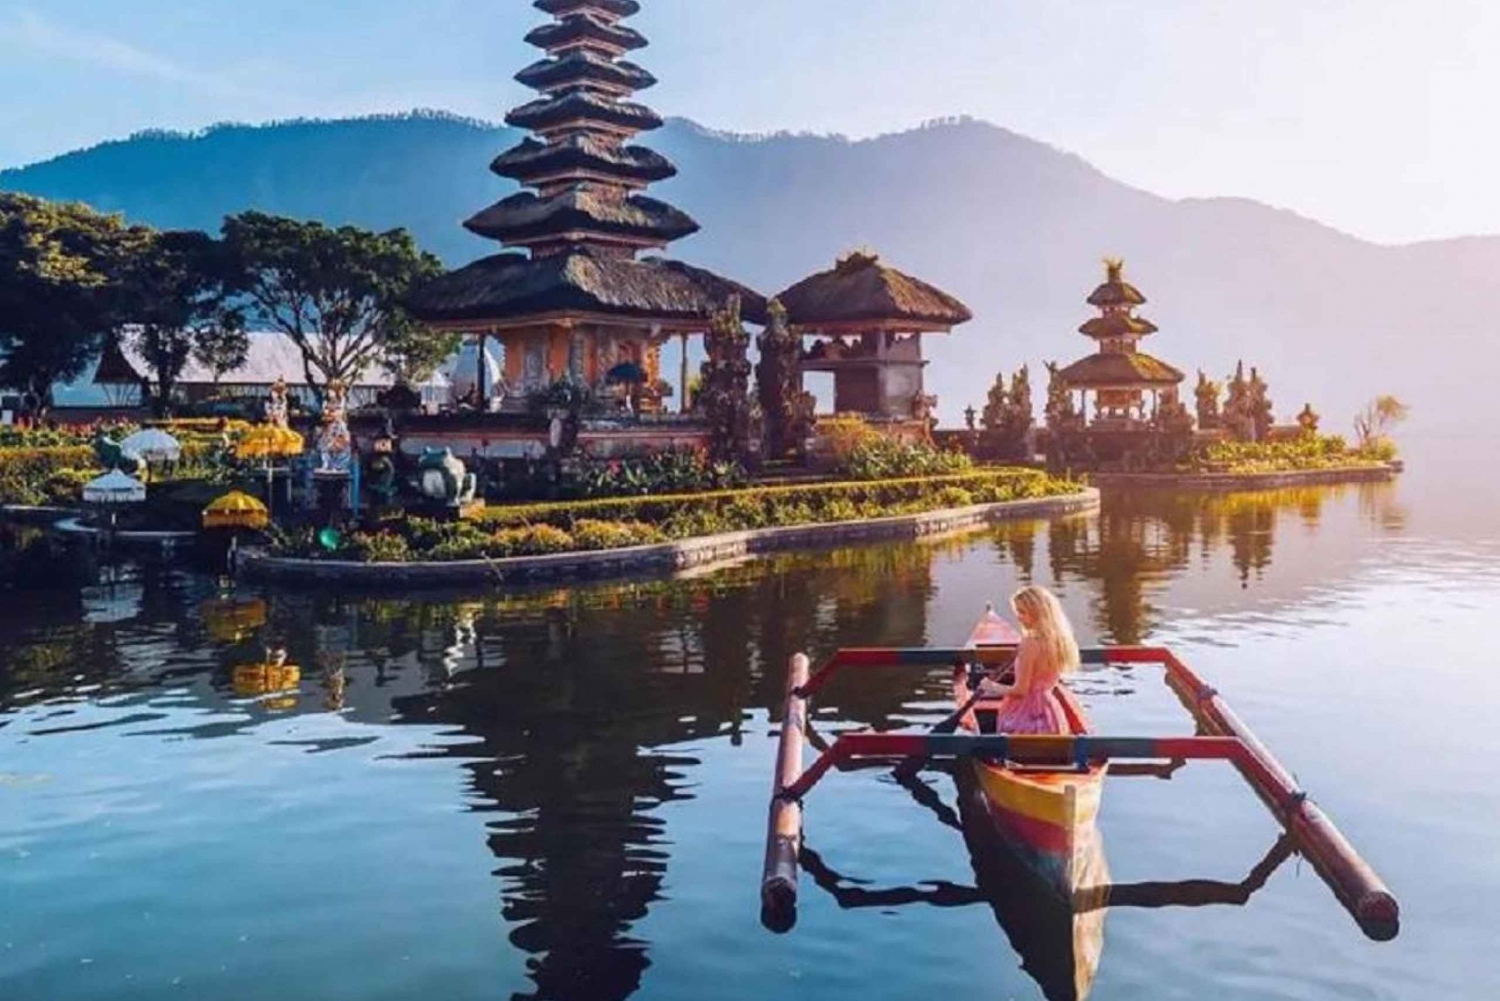 Bali: Ulundanu Temple, Banyumala Waterfall & Rice Terrace